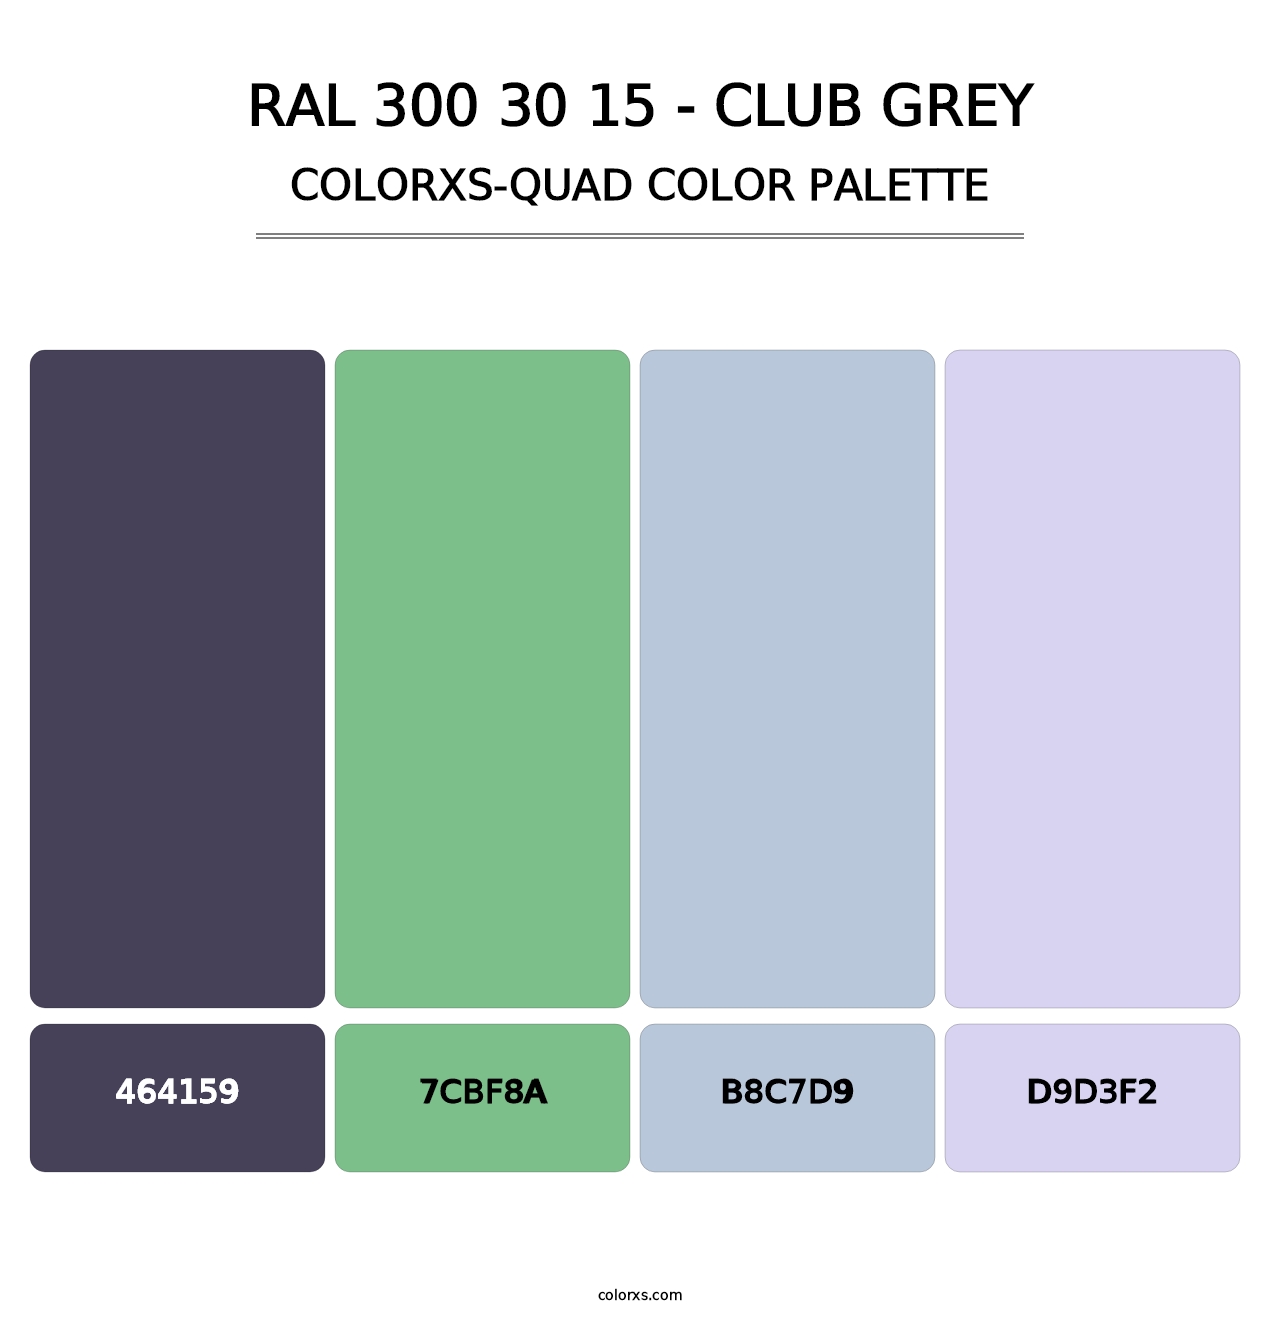 RAL 300 30 15 - Club Grey - Colorxs Quad Palette